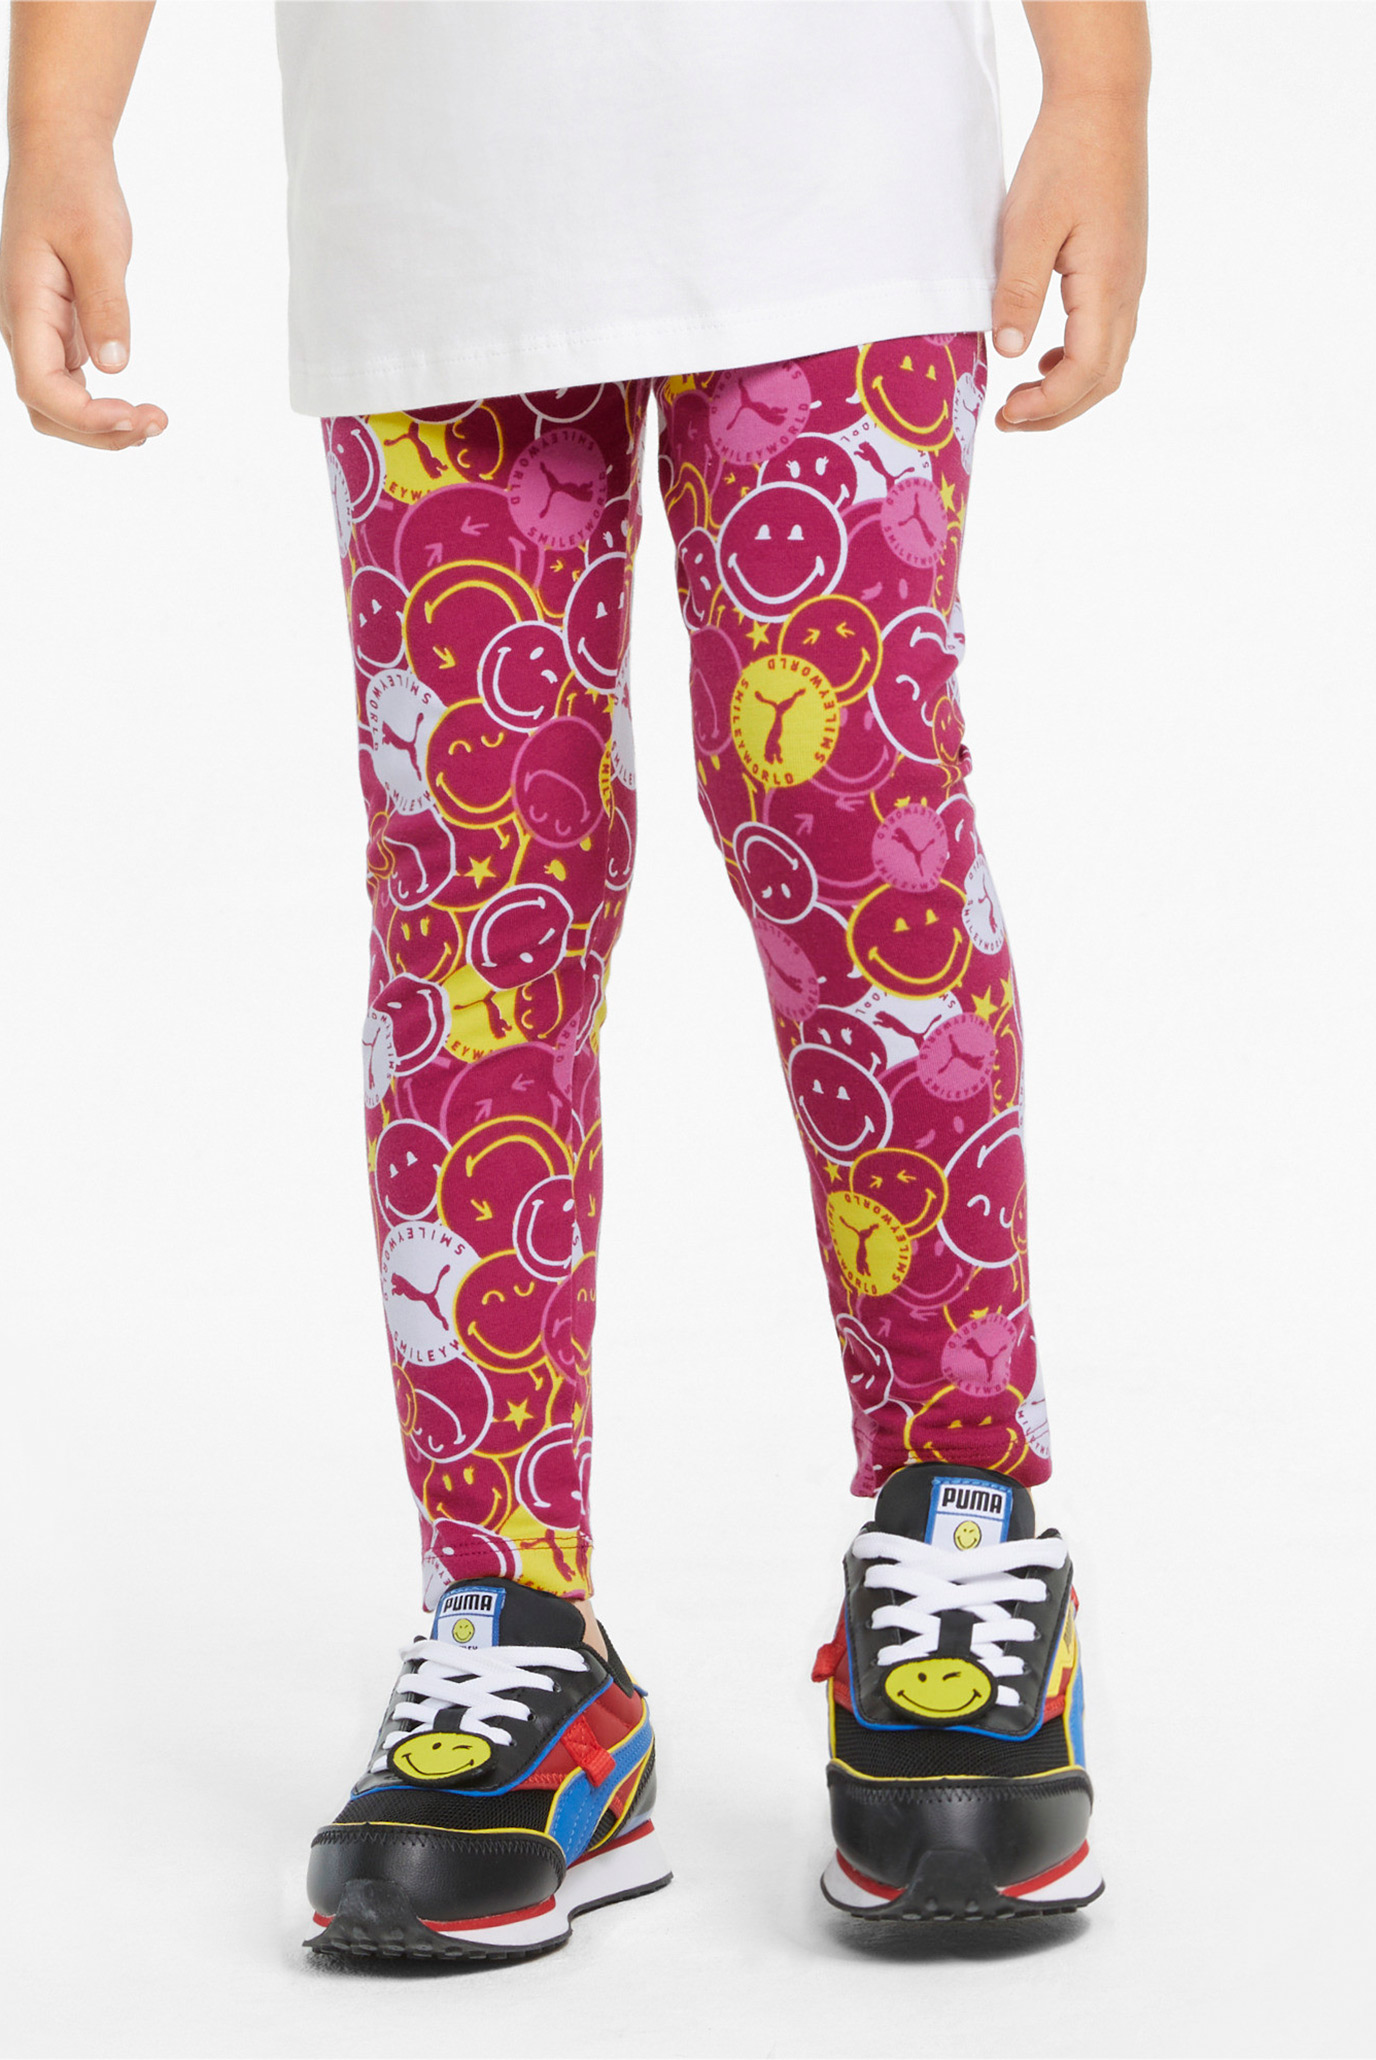 Дитячі легінси PUMA x SMILEY WORLD Printed Kids' Leggings 1